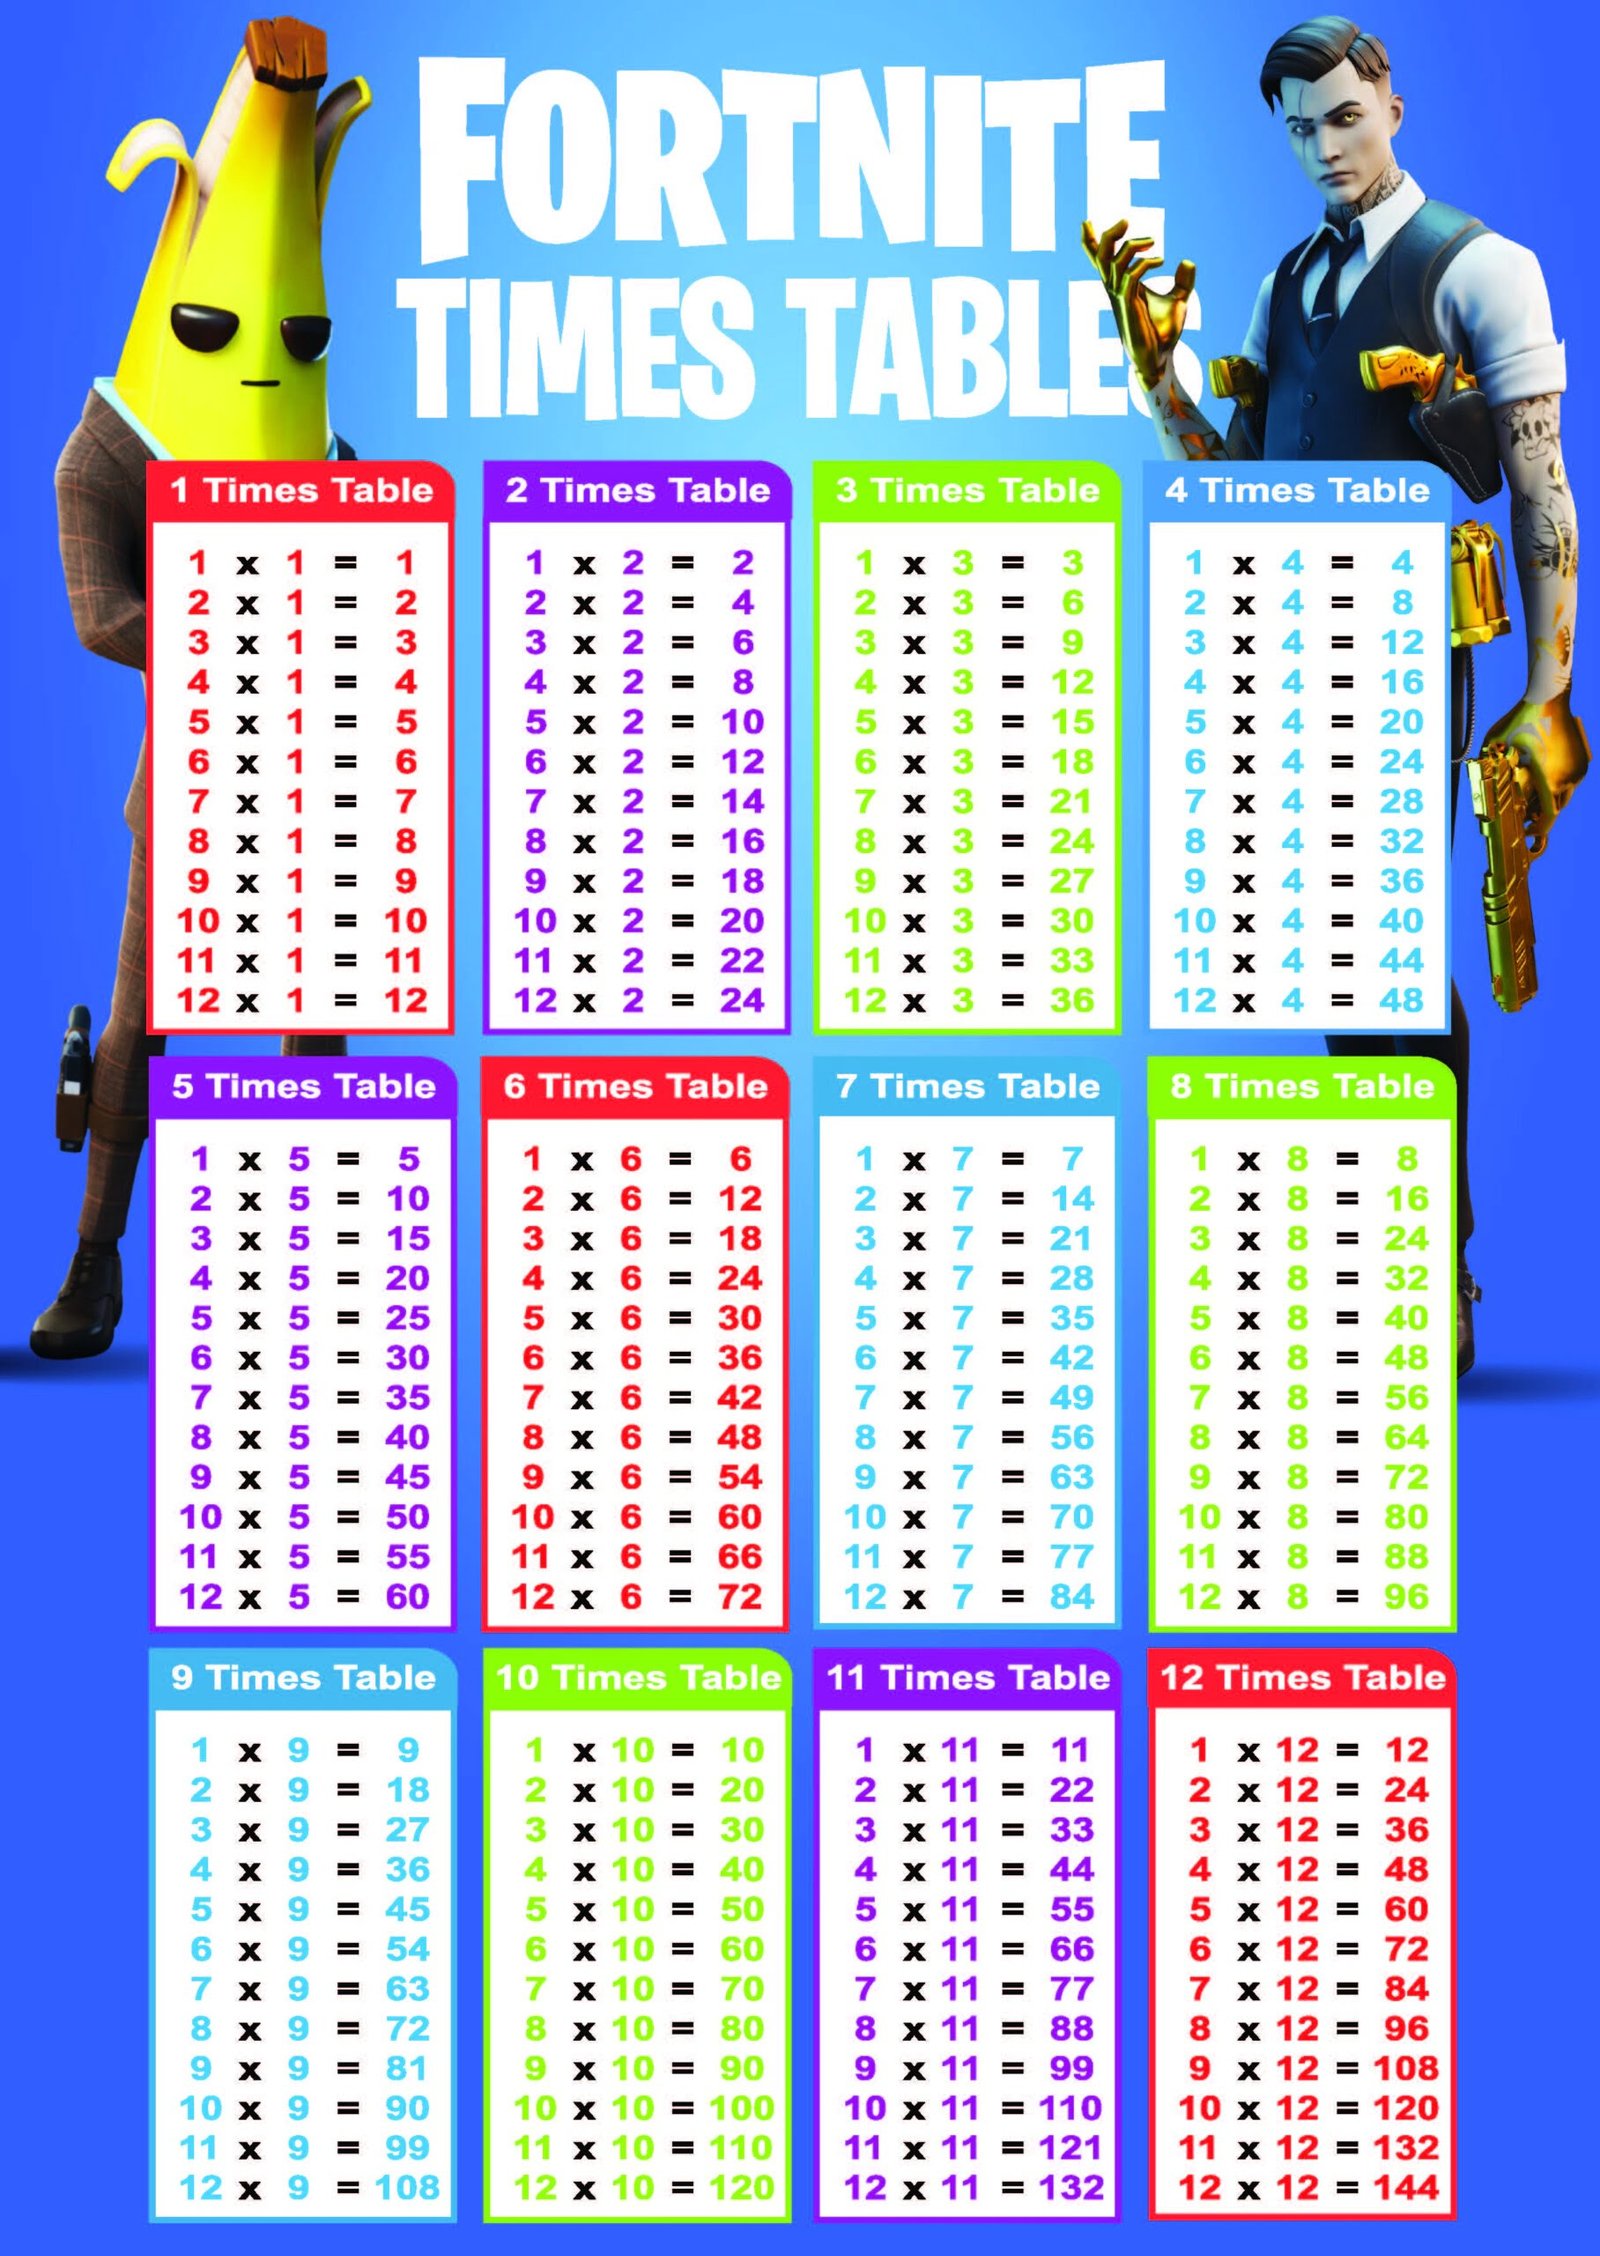 Multiplication Table 1 12